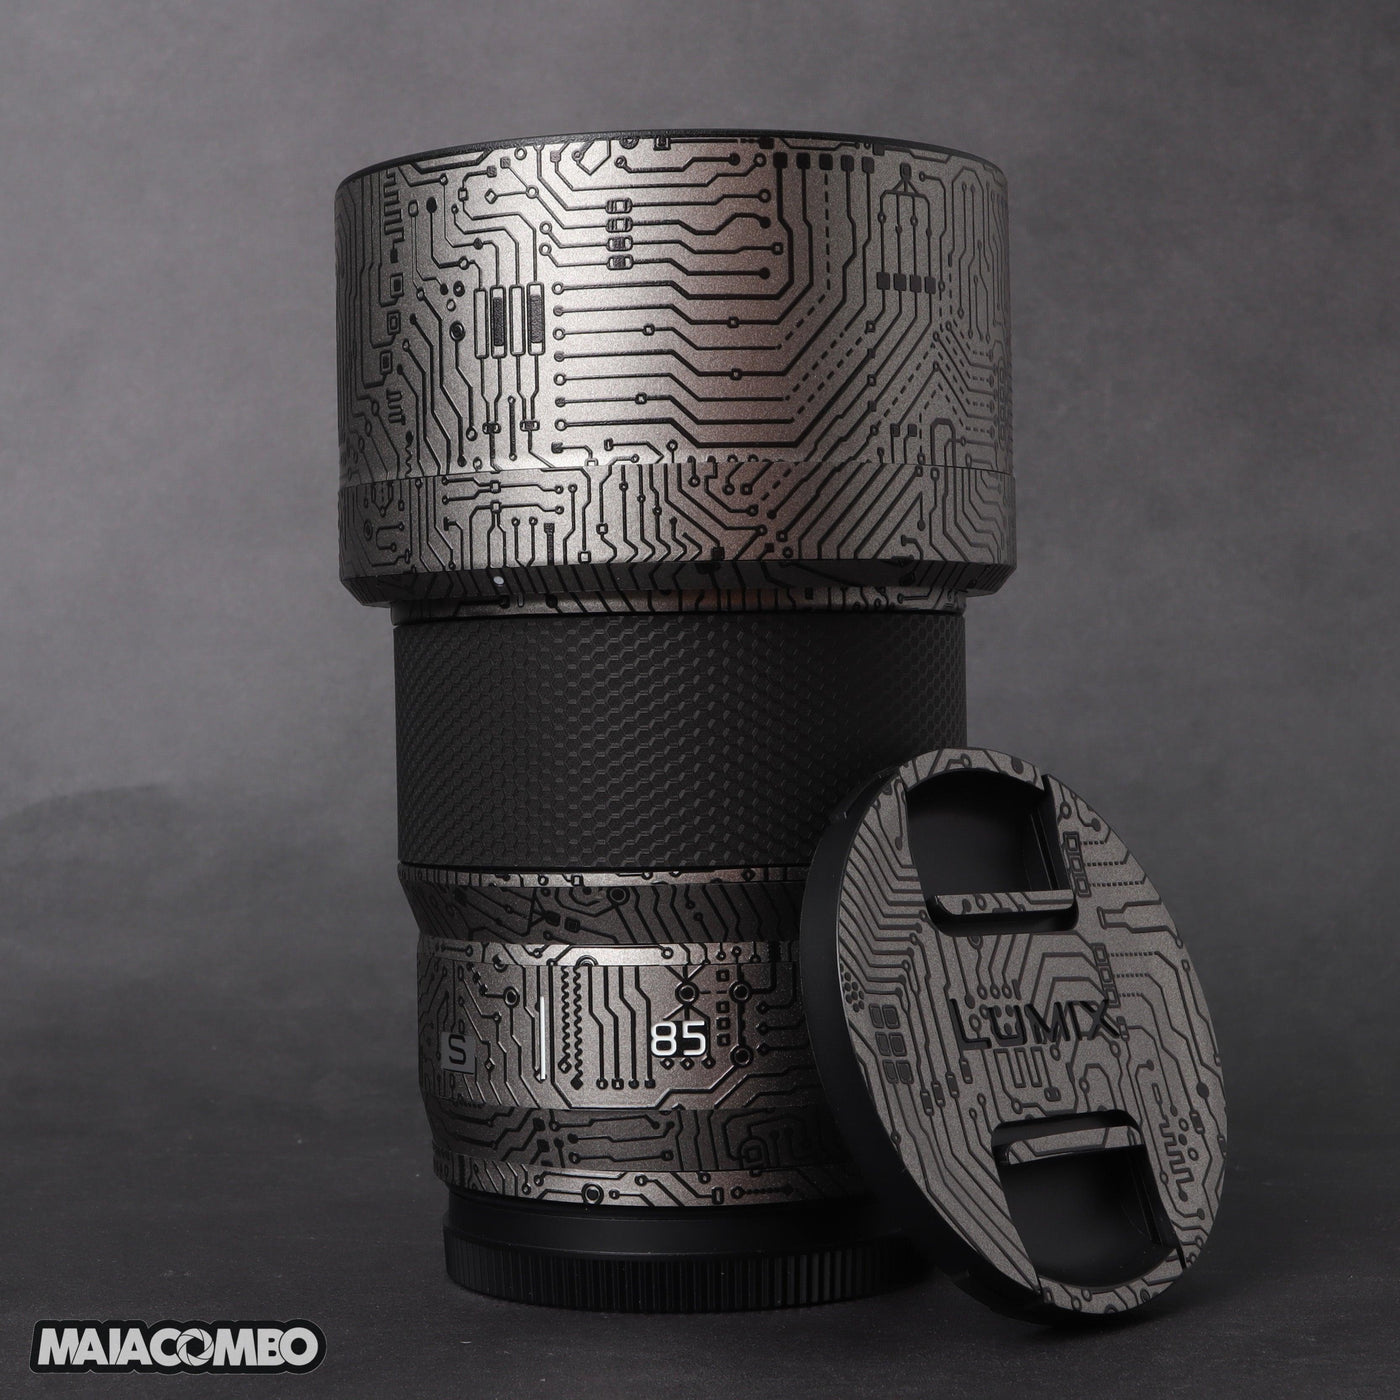 Panasonic Lumix S 85mm f:1.8 Lens Skin - MAIACOMBO